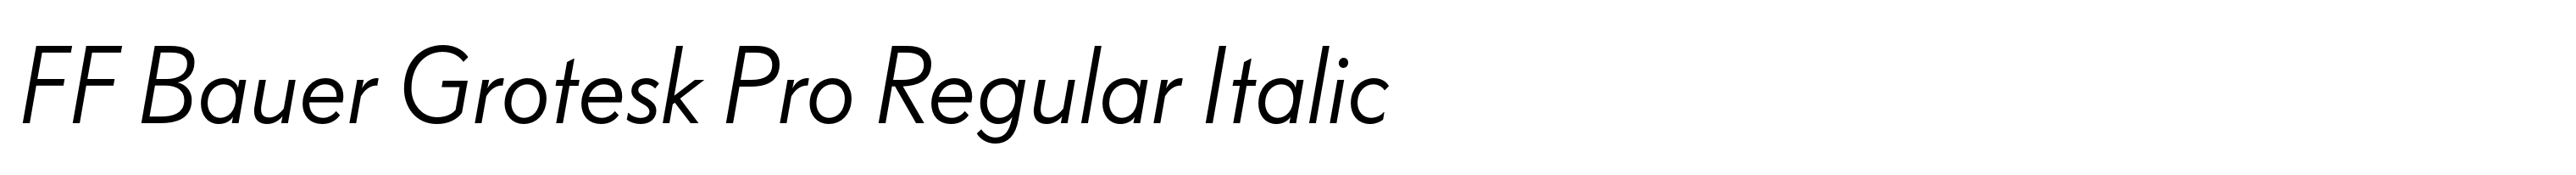 FF Bauer Grotesk Pro Regular Italic